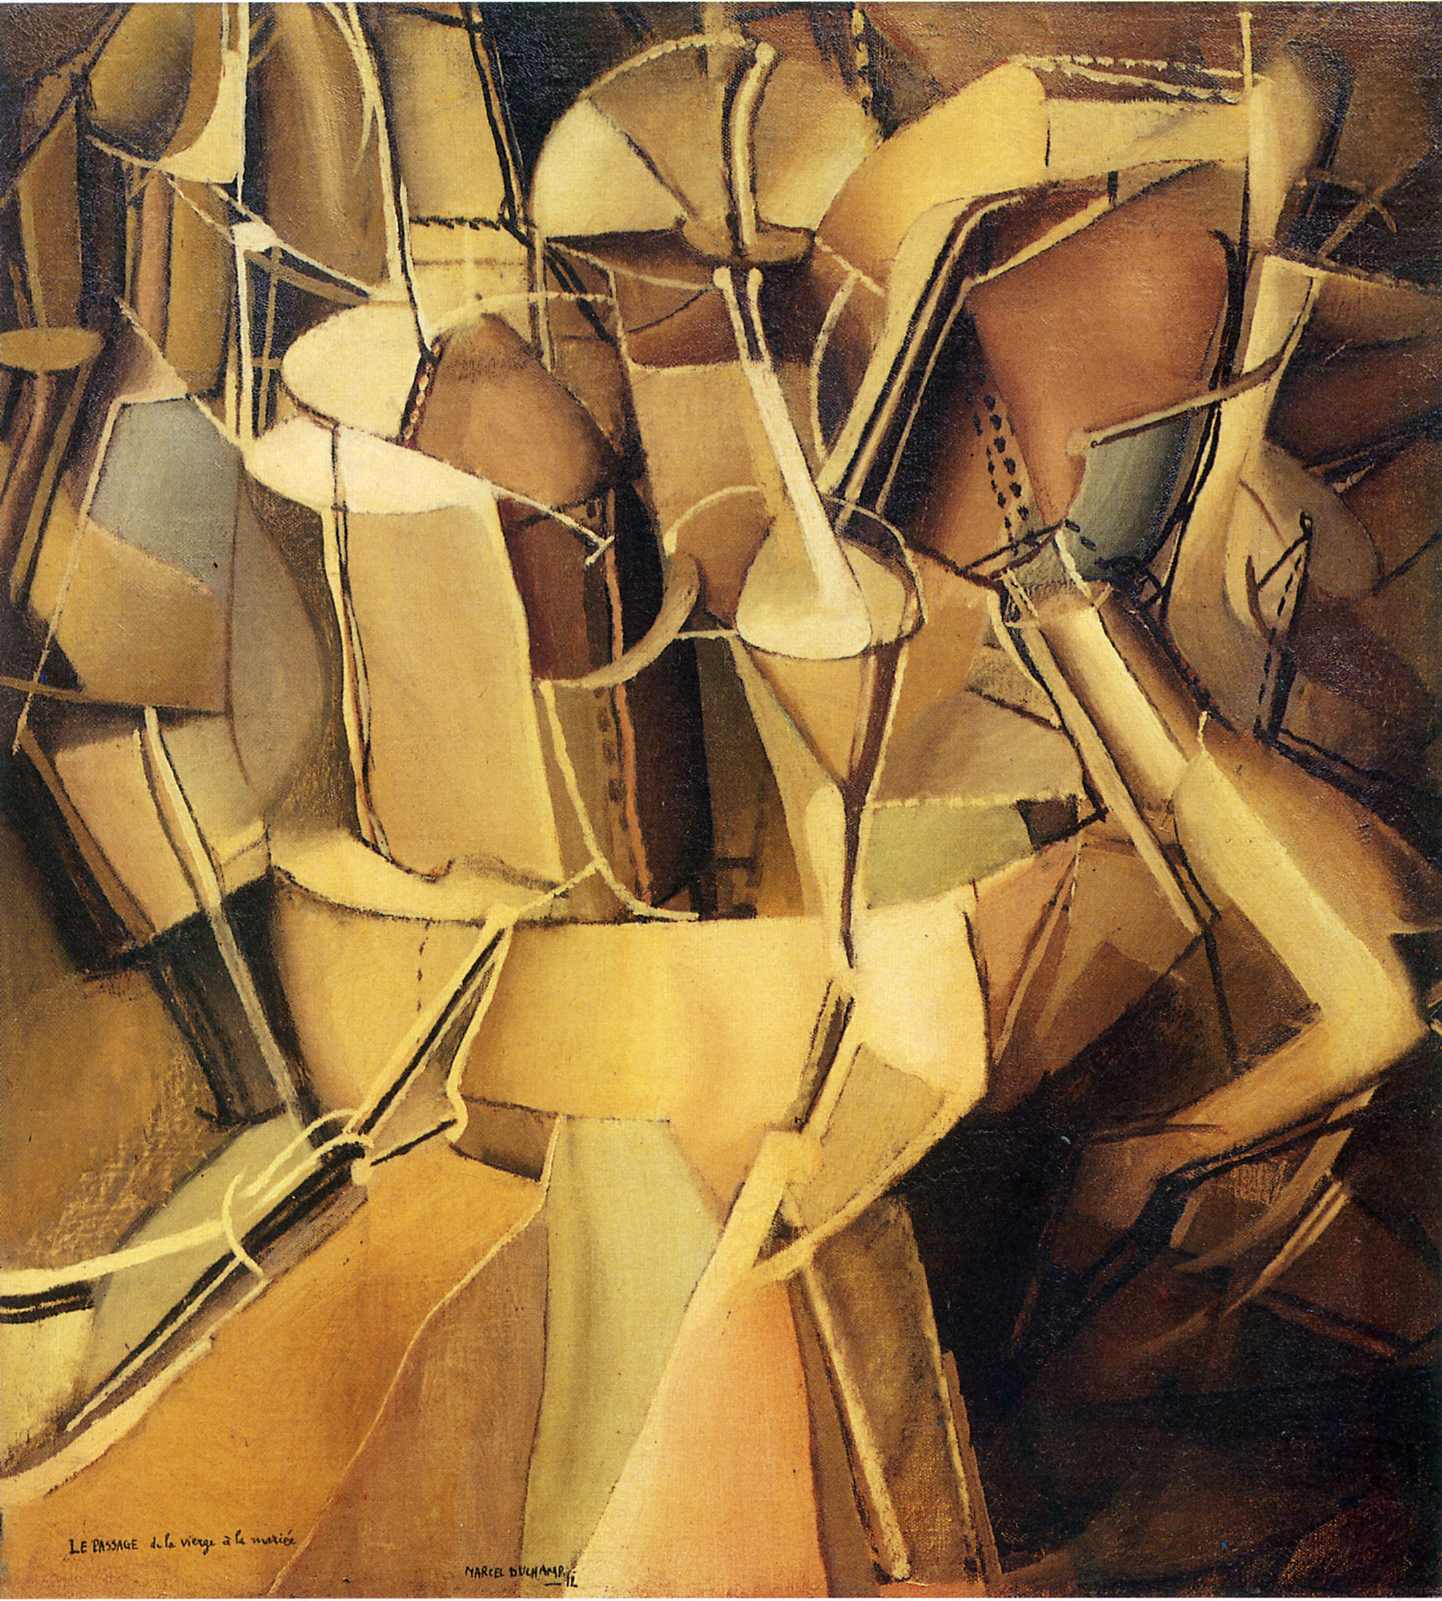 Bakire'den Geline Geçiş by Marcel Duchamp - 1912 - 59 x 53.5 cm Museum of Modern Art